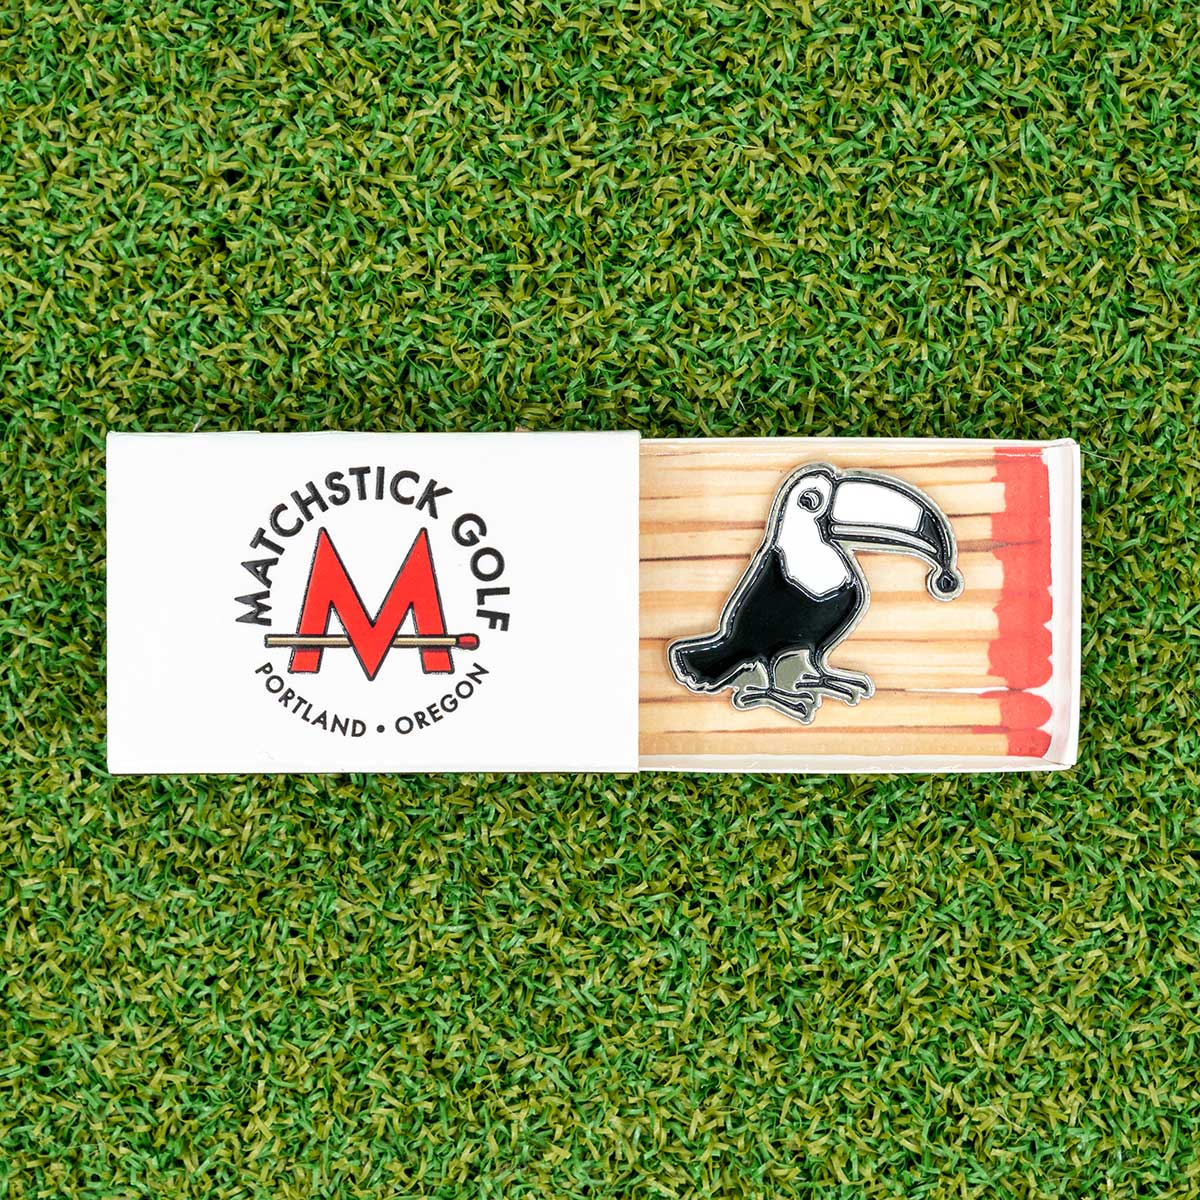 lead tape chronicles toucan golf ball marker matchbox packaging